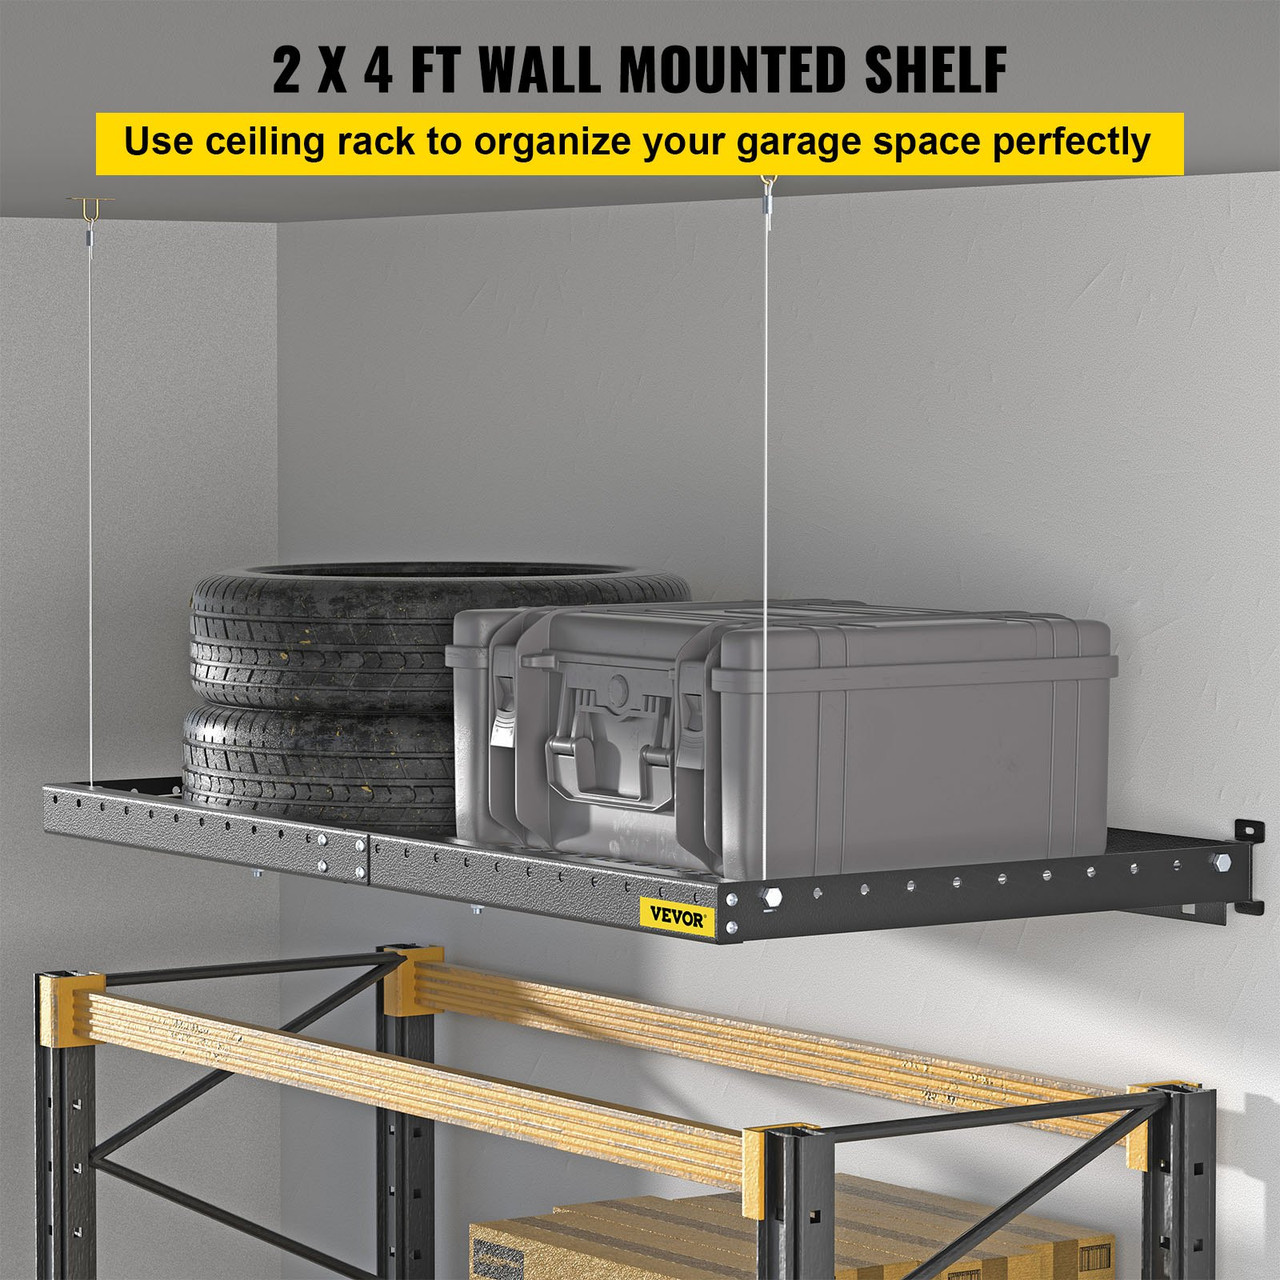 Garage upgrades diy floating shelves and wall mount detail station